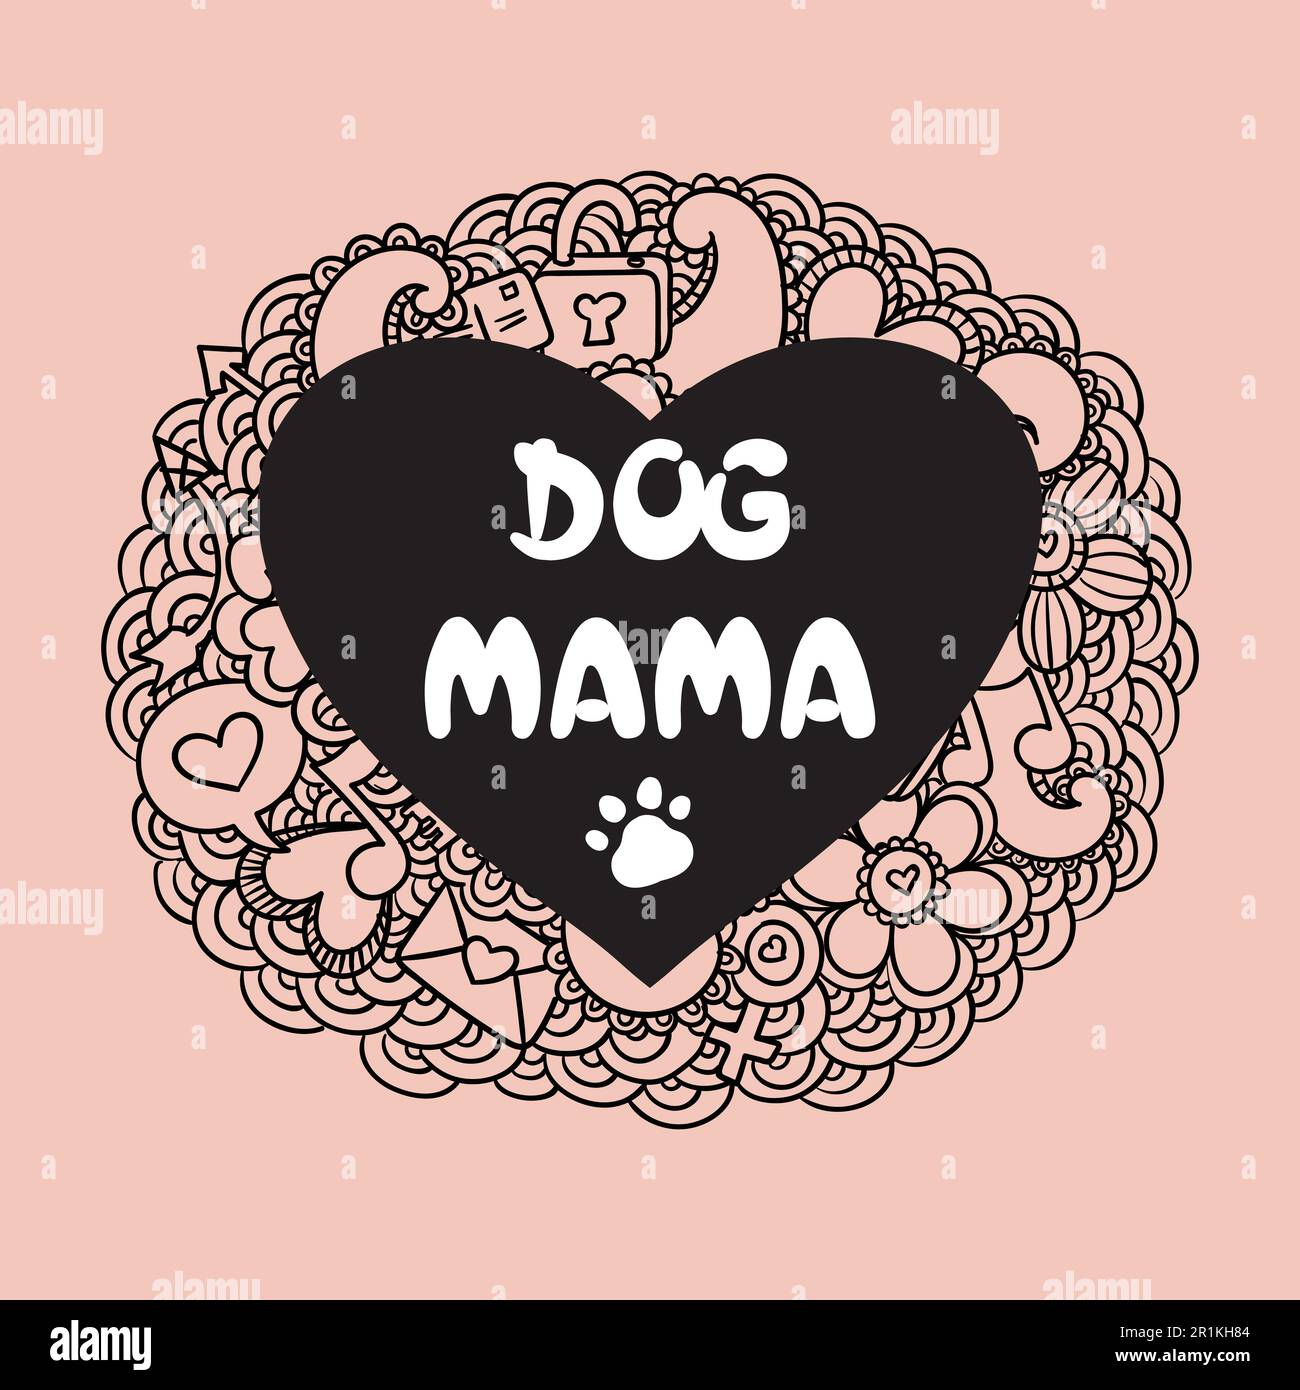 Dog Mama Dog T-shirt Design Stock Vector